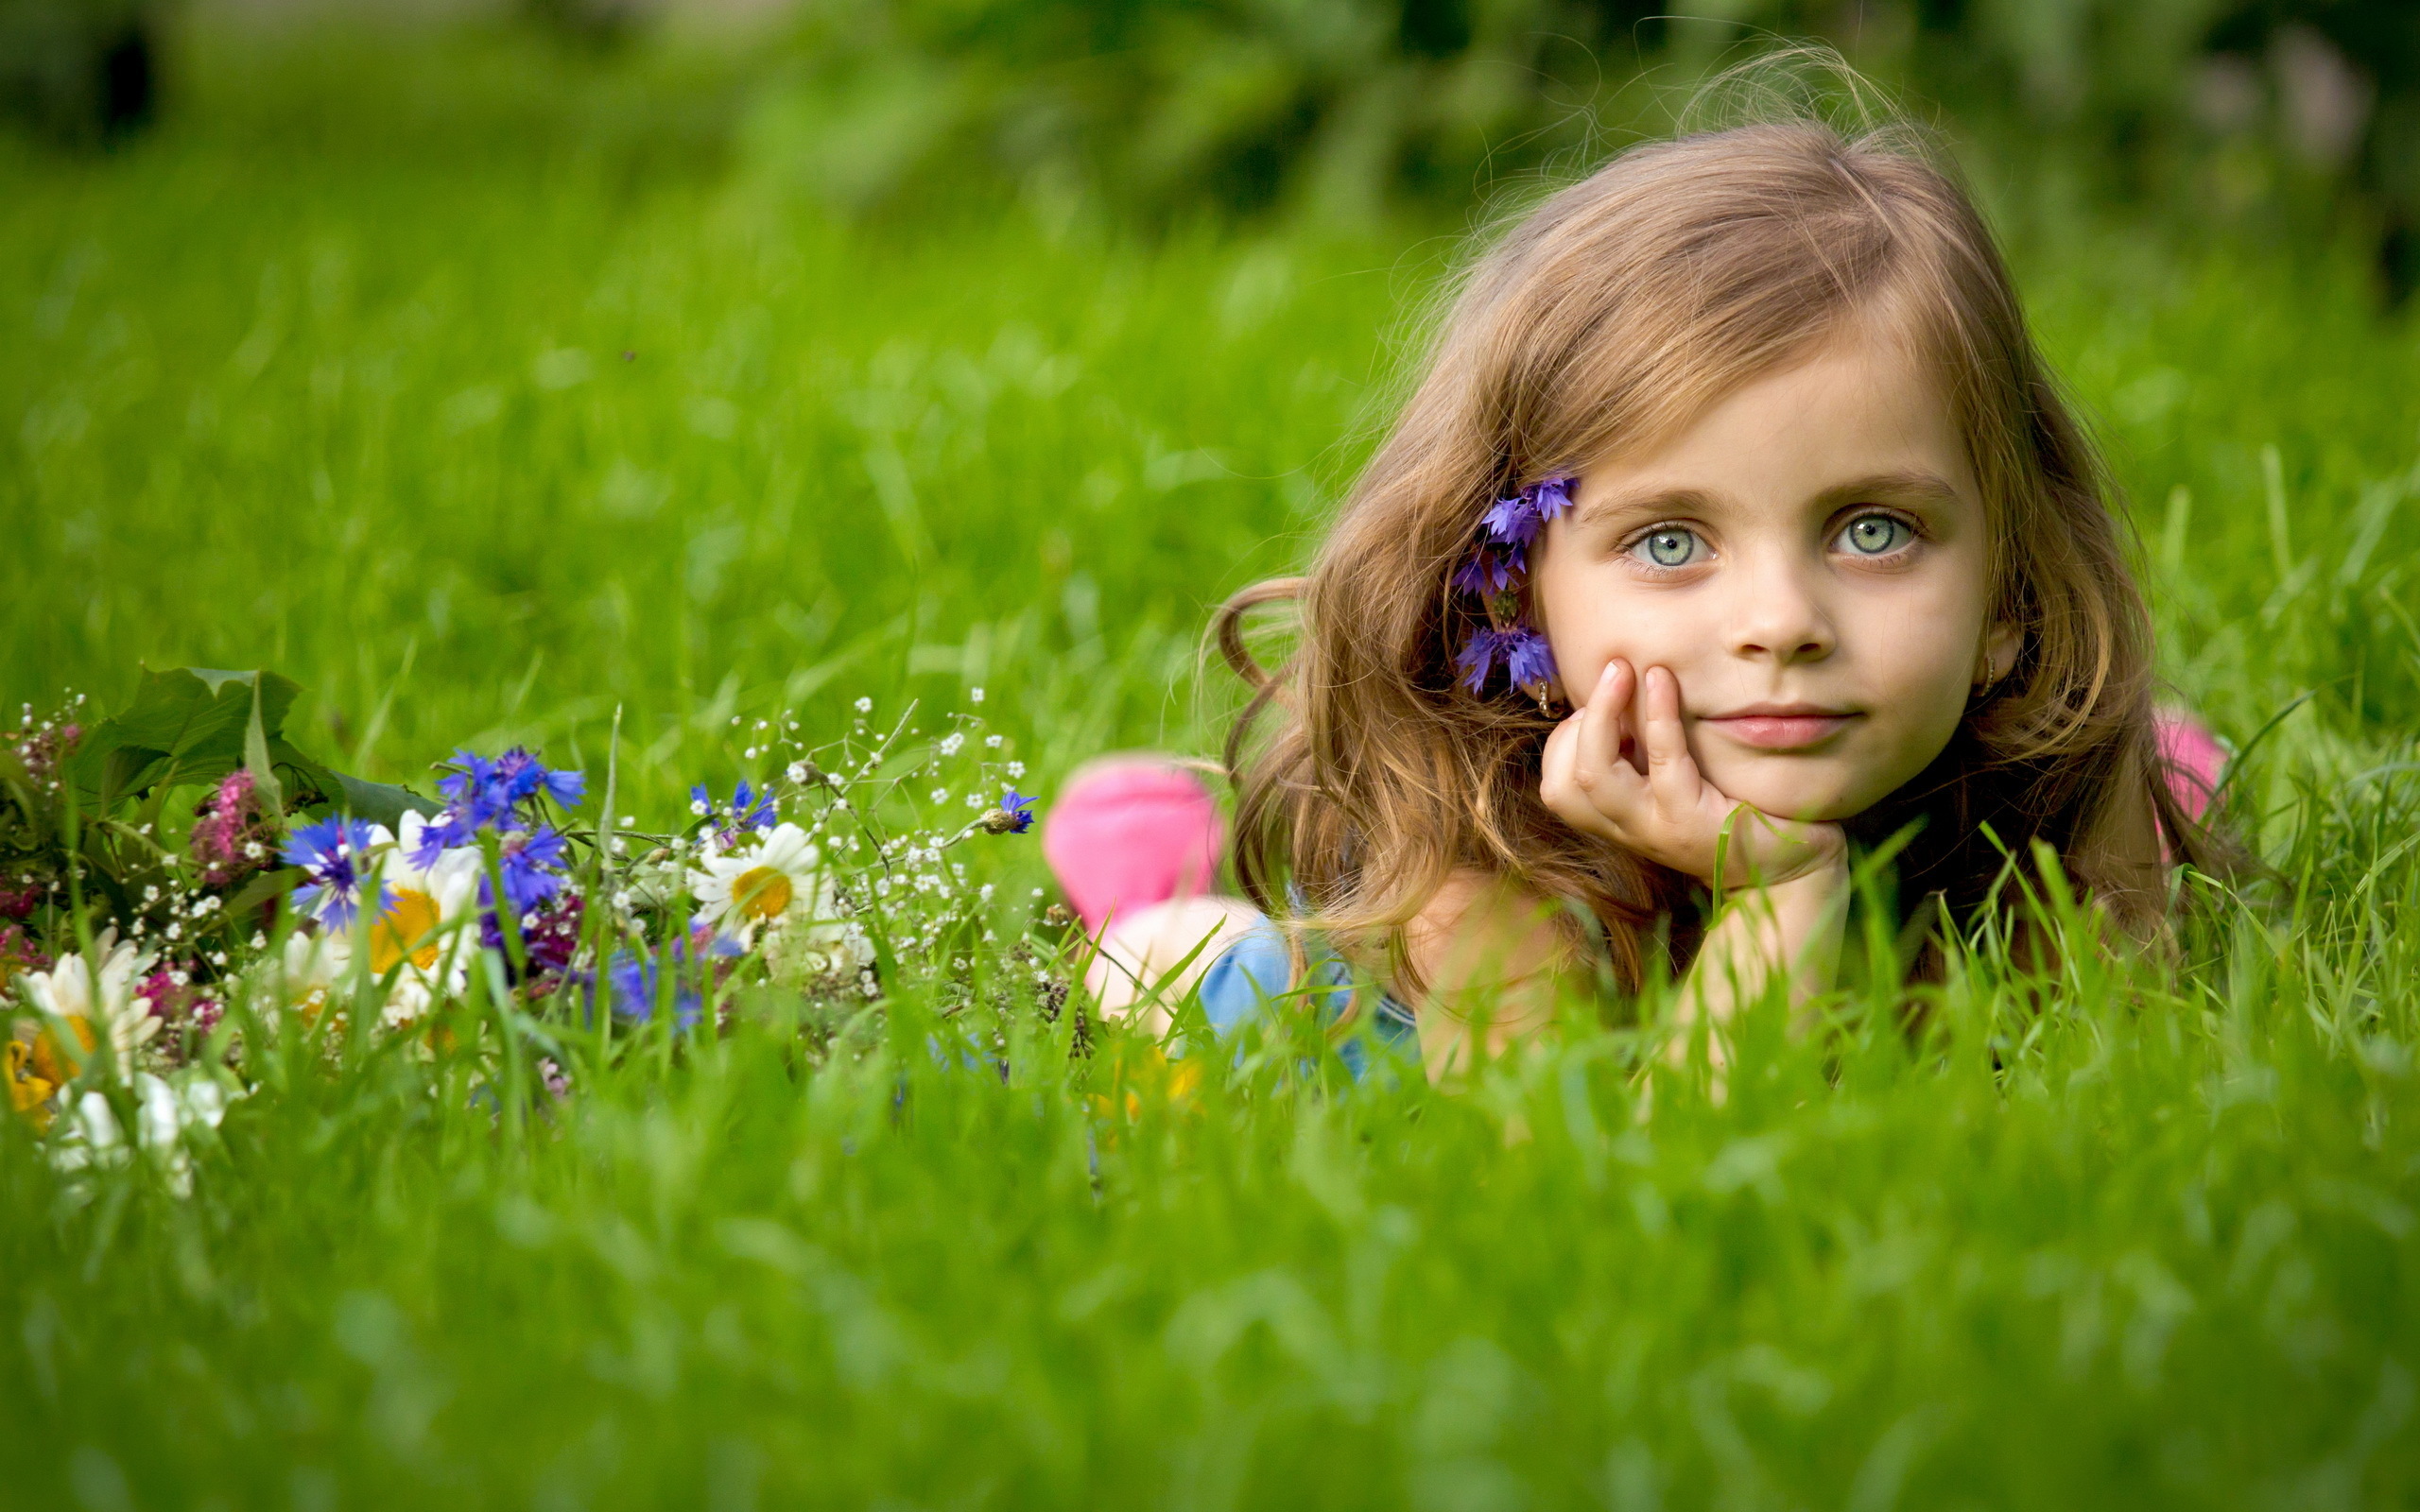 Sweet Girl On The Green Field Photography Wallpaper - Green Eyes Like The Grass - HD Wallpaper 